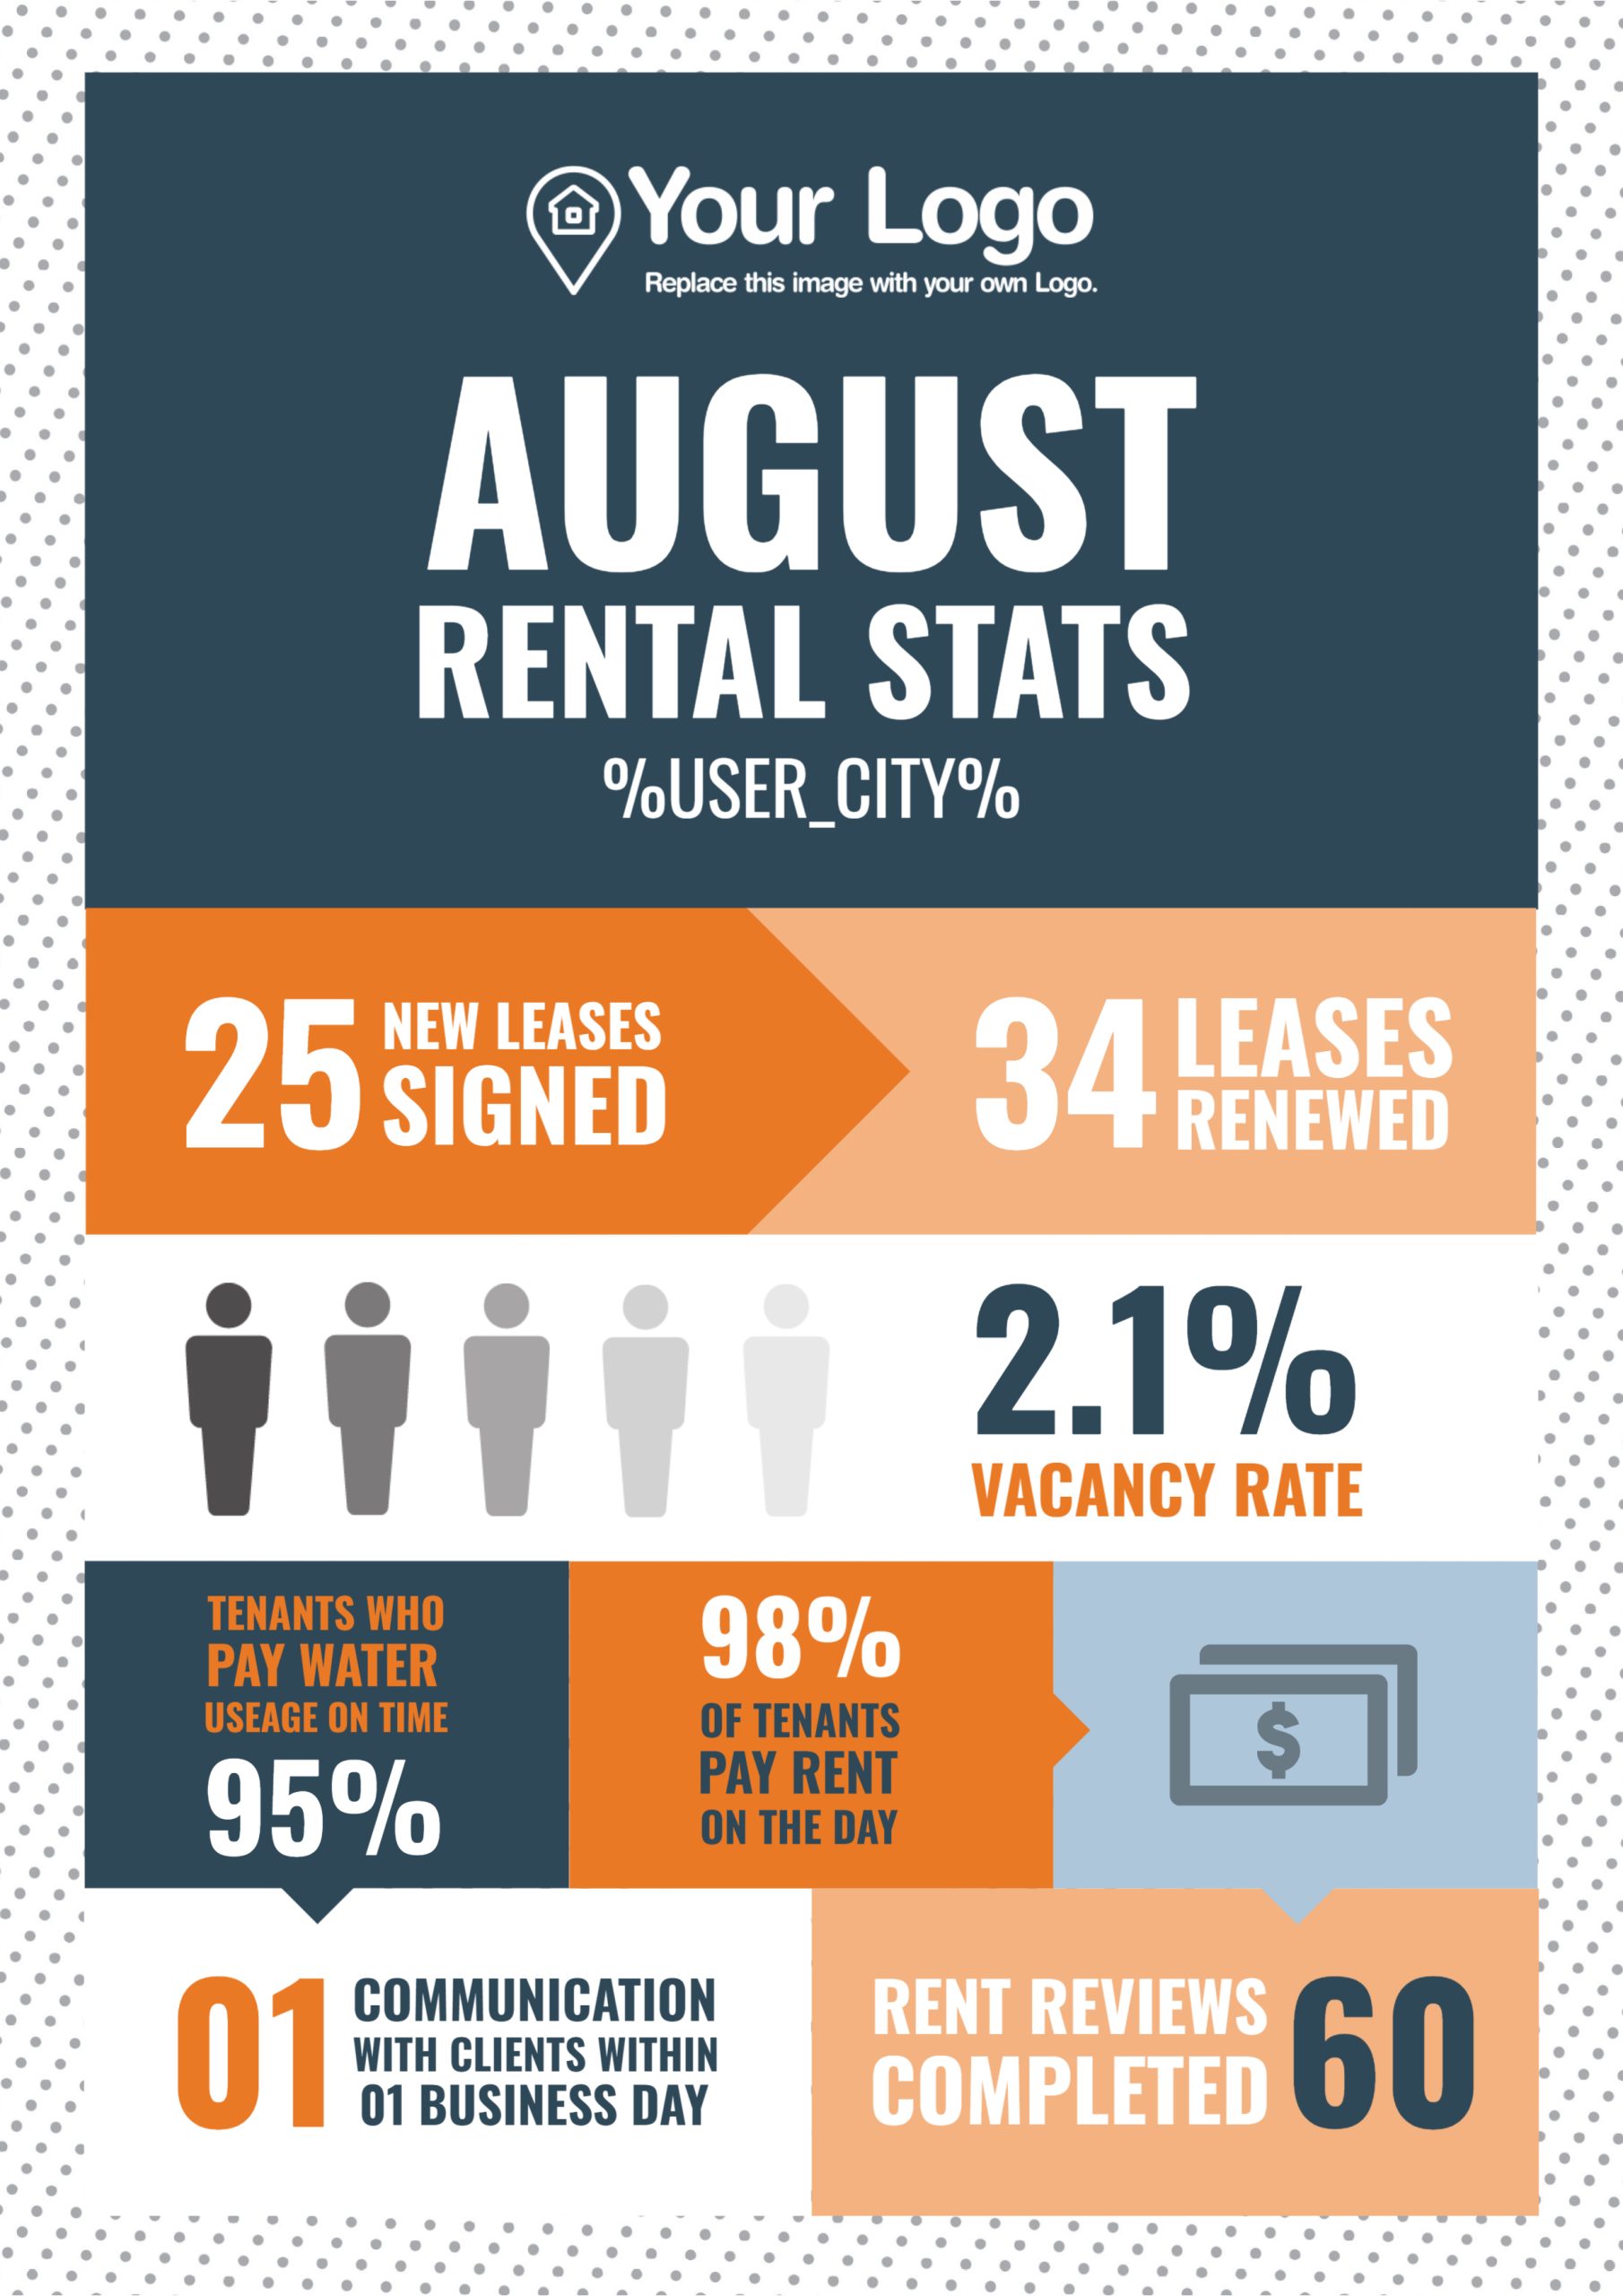 Jigglar infographic on rental stats